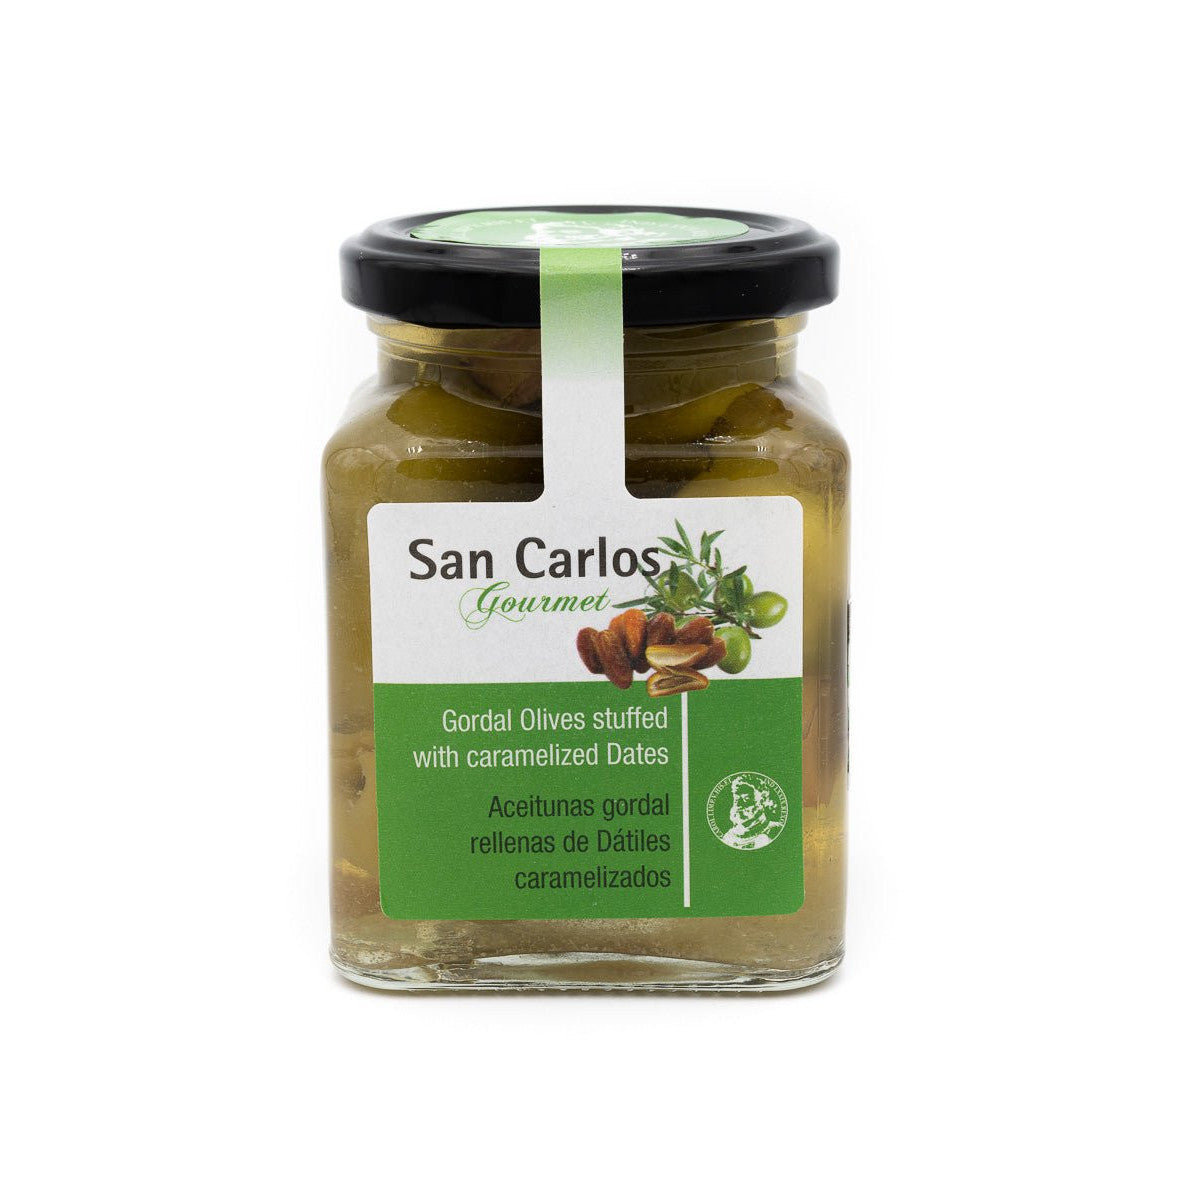 San Carlos grüne Oliven Gordal mit Datteln gefüllt (140g) - Gourmet Markt - Pago de los Baldios de San Carlos